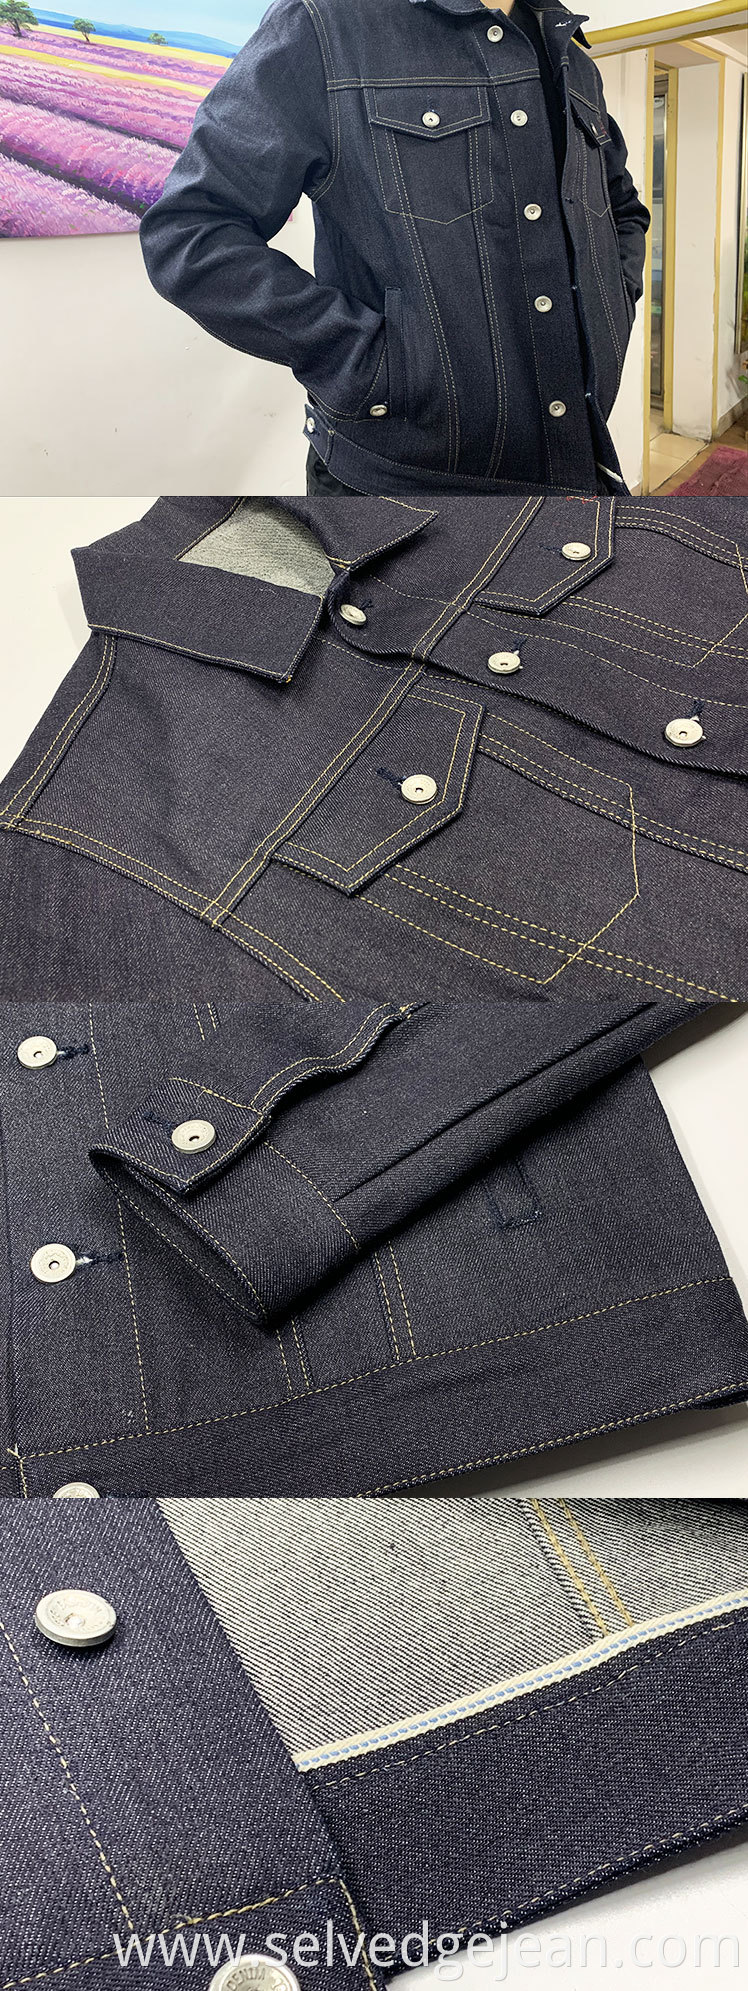 japanese mens denim fabric selvedge jeans brand tom tompson denim fabric for mens denim jacket